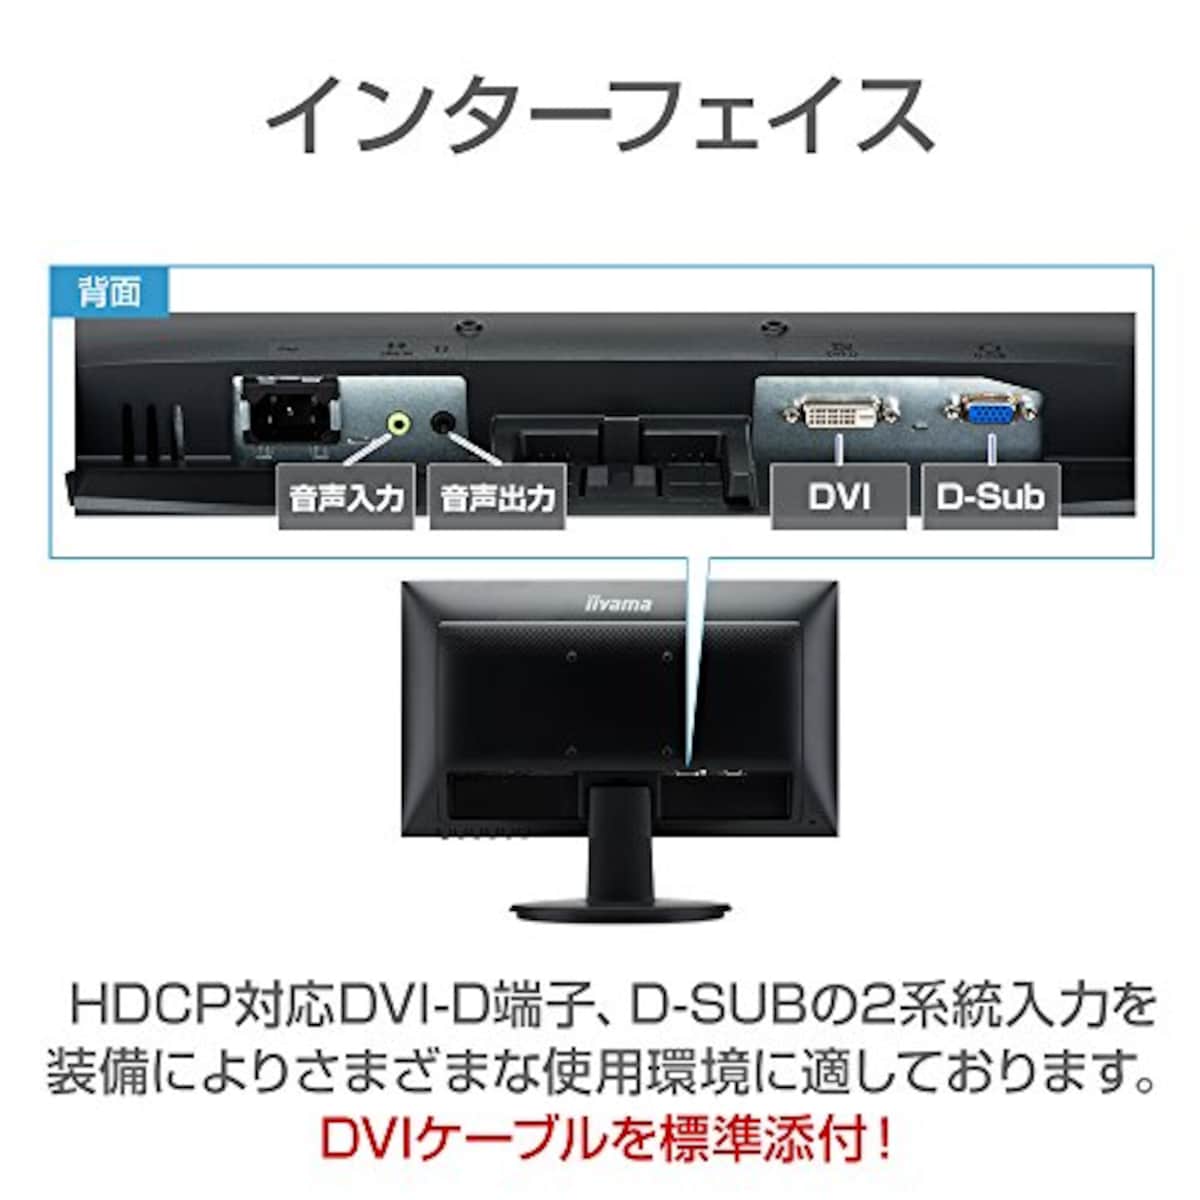  iiyama モニター ディスプレイ E2083HSD-B2 (19.5インチ/HD+/TN/D-sub,DVI-D/3年保証)画像5 